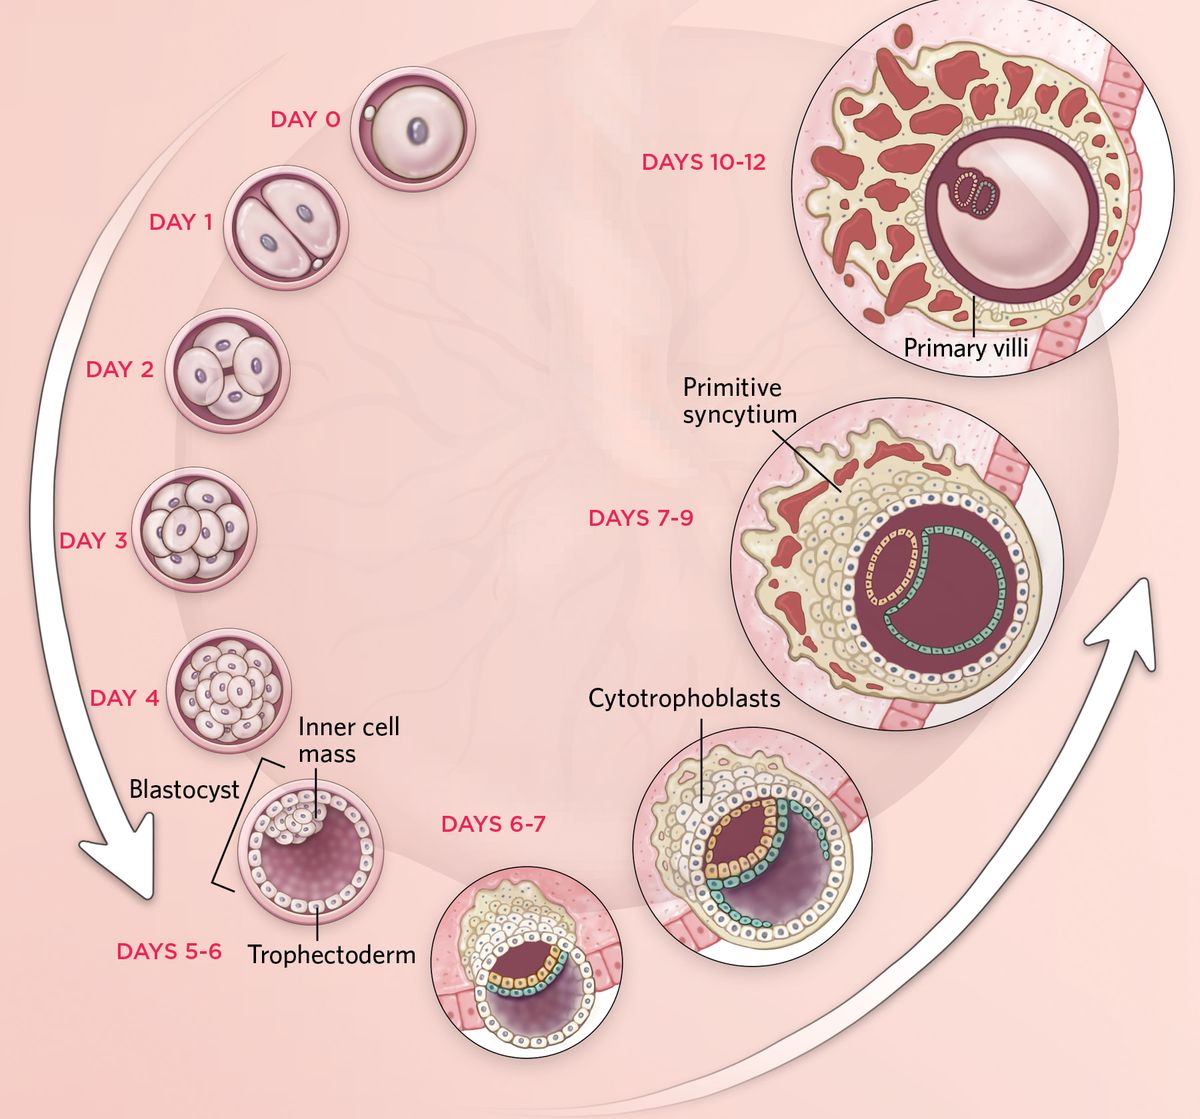 Days 0-12 of placenta development